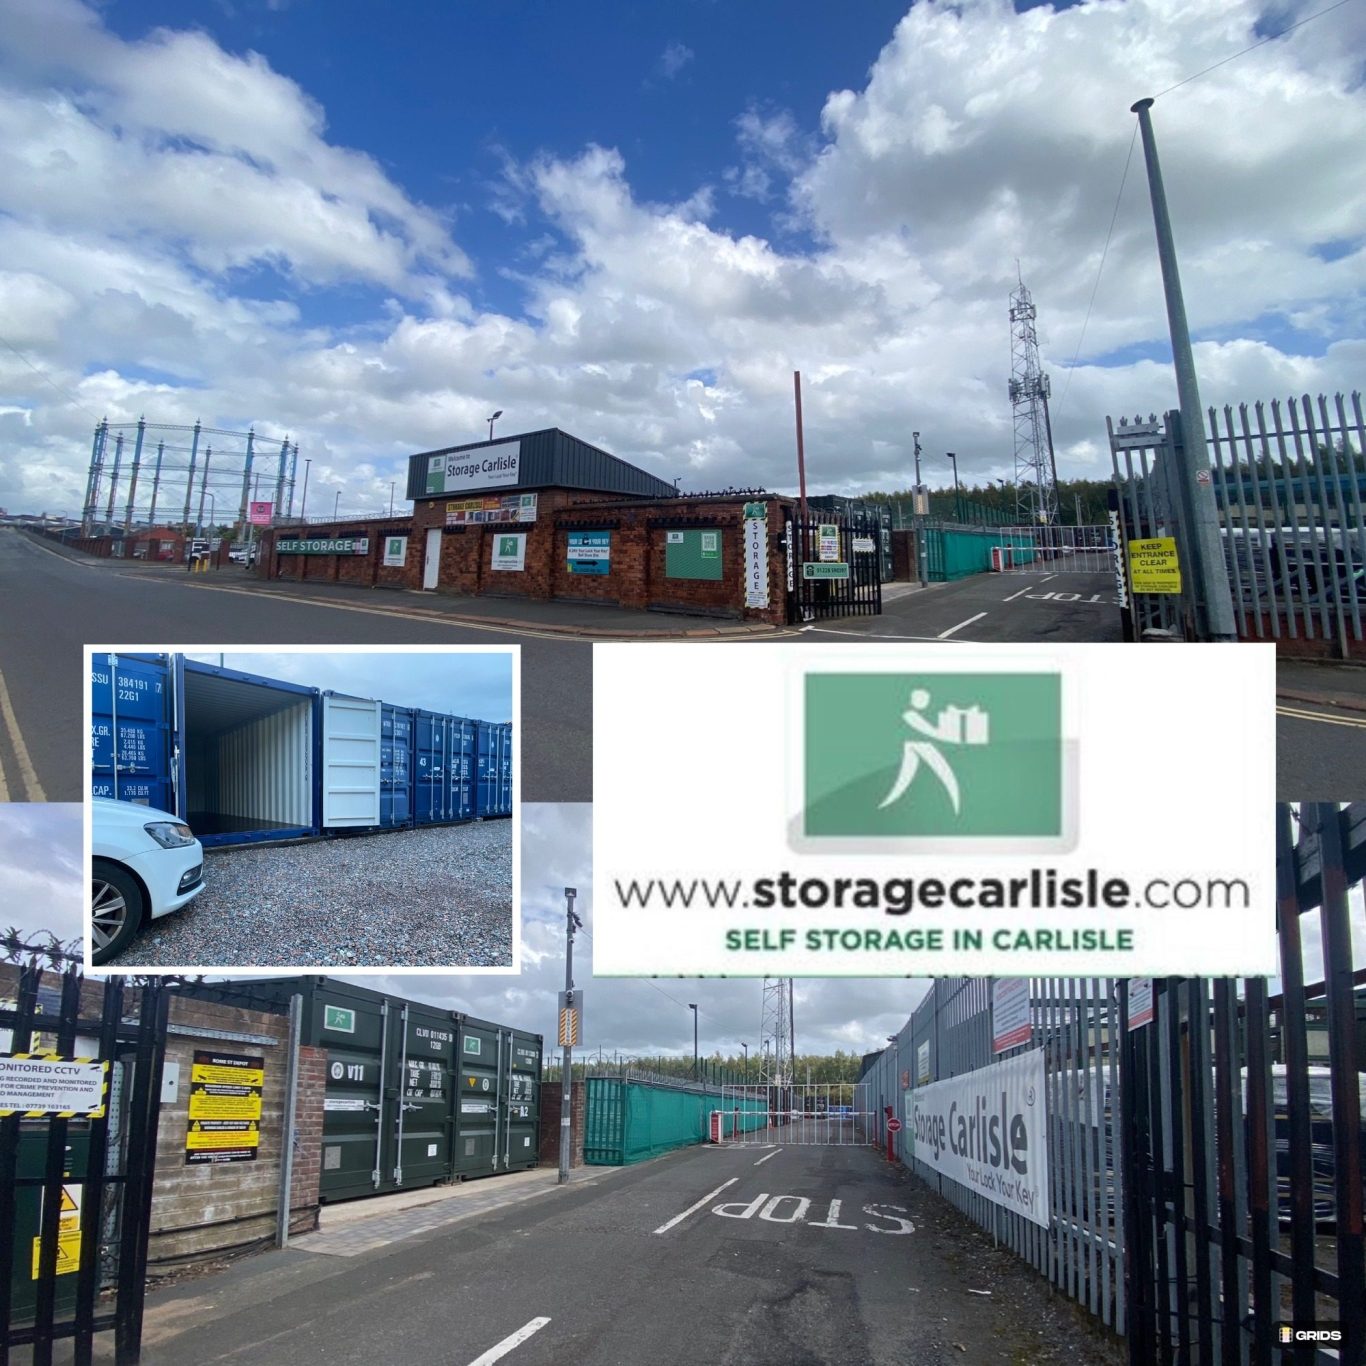 Storage Carlisle on Rome Street Depot